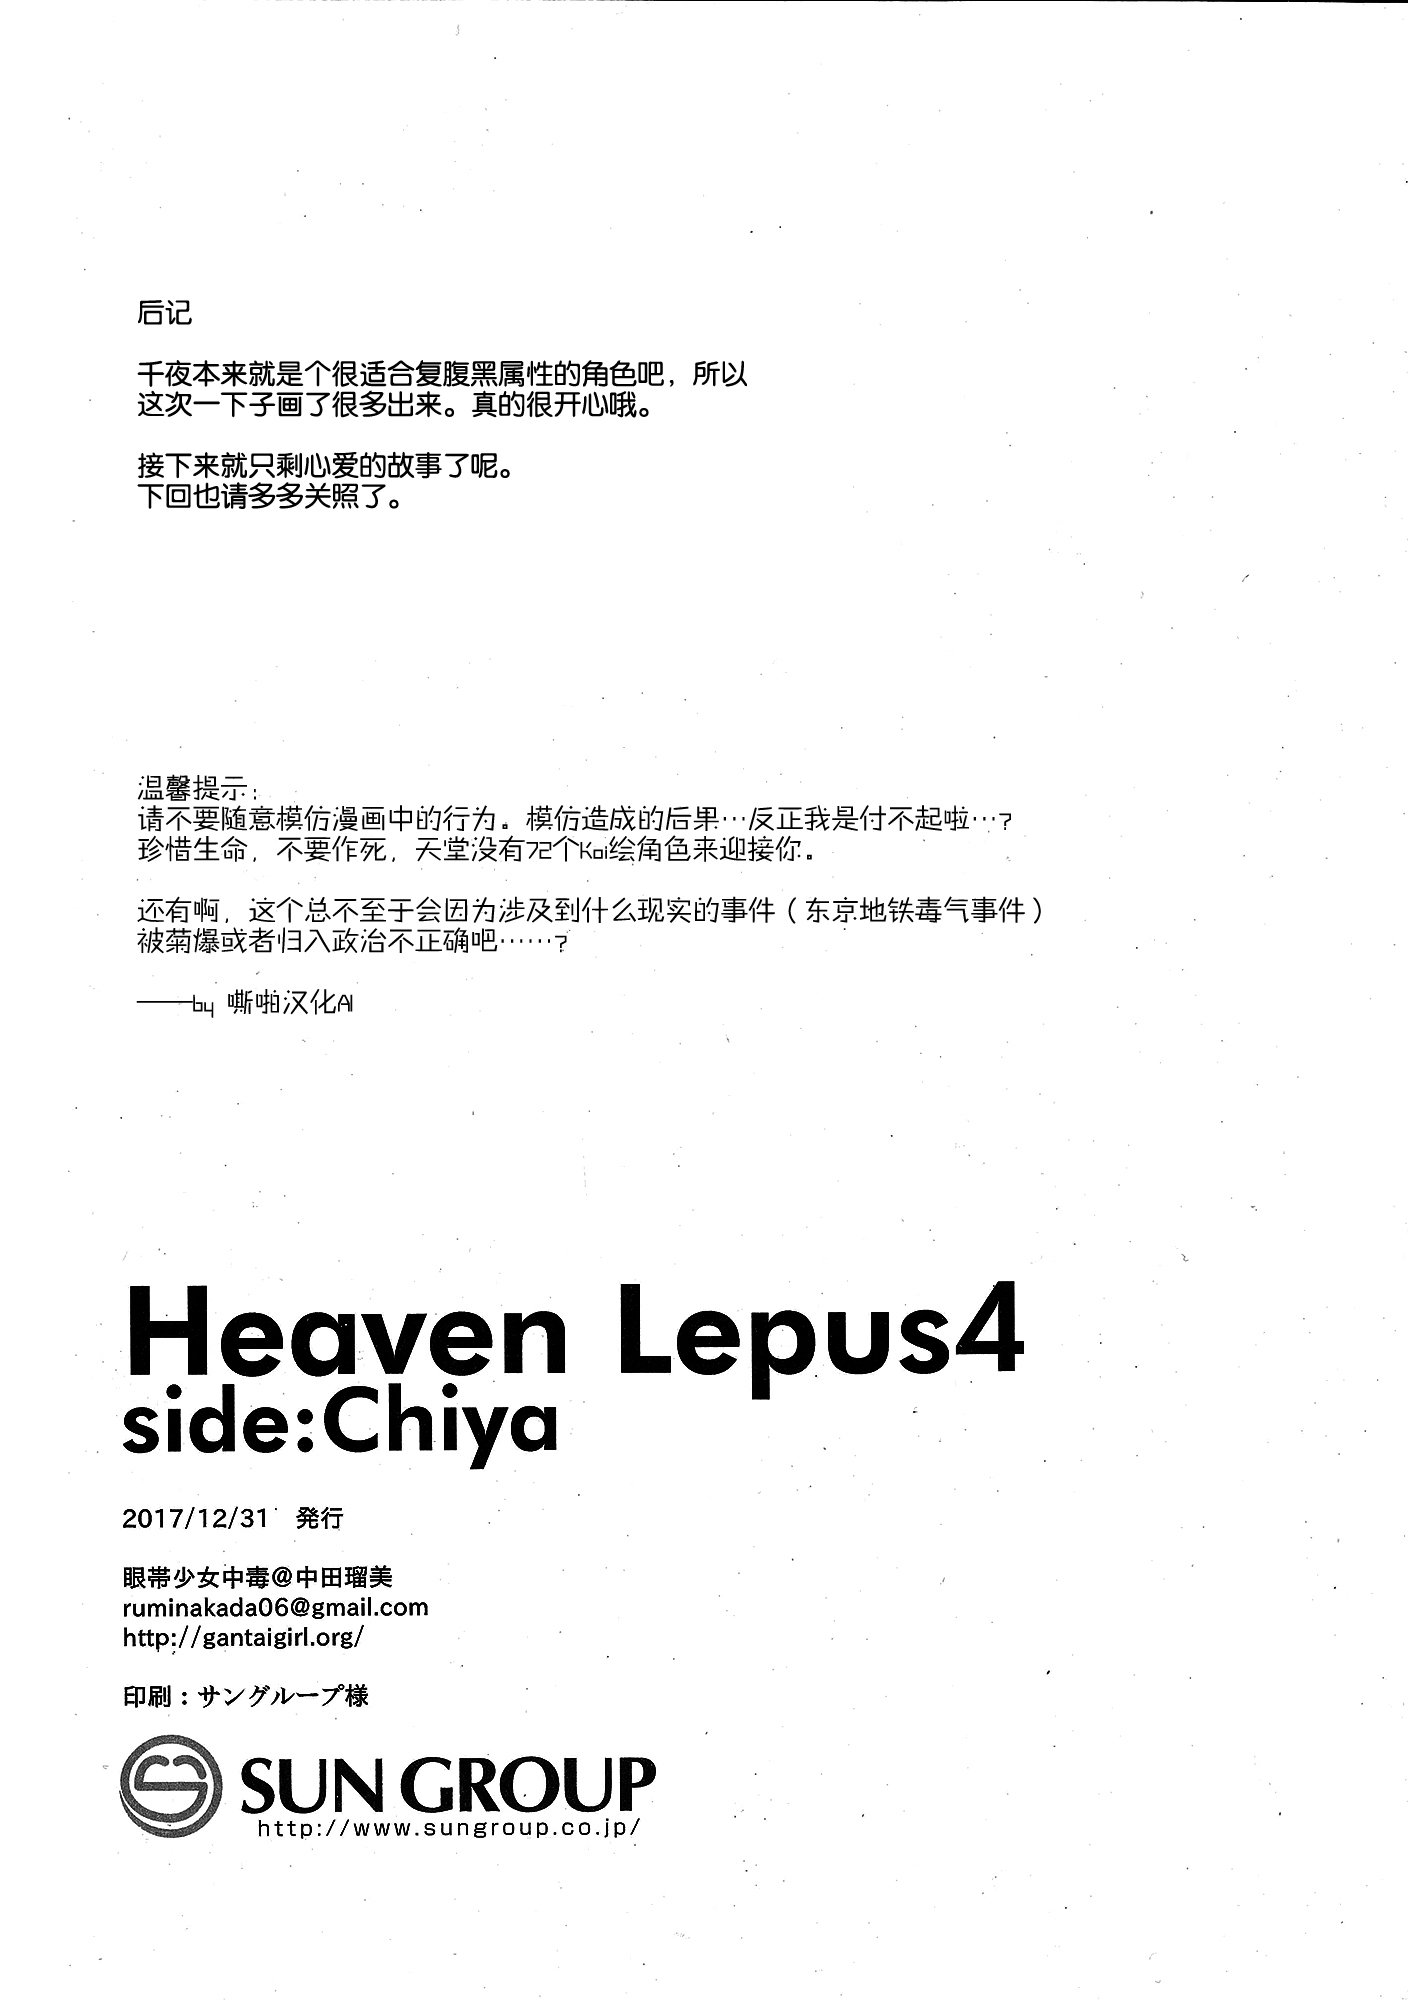 Heaven Lepus4 Side：Chiya